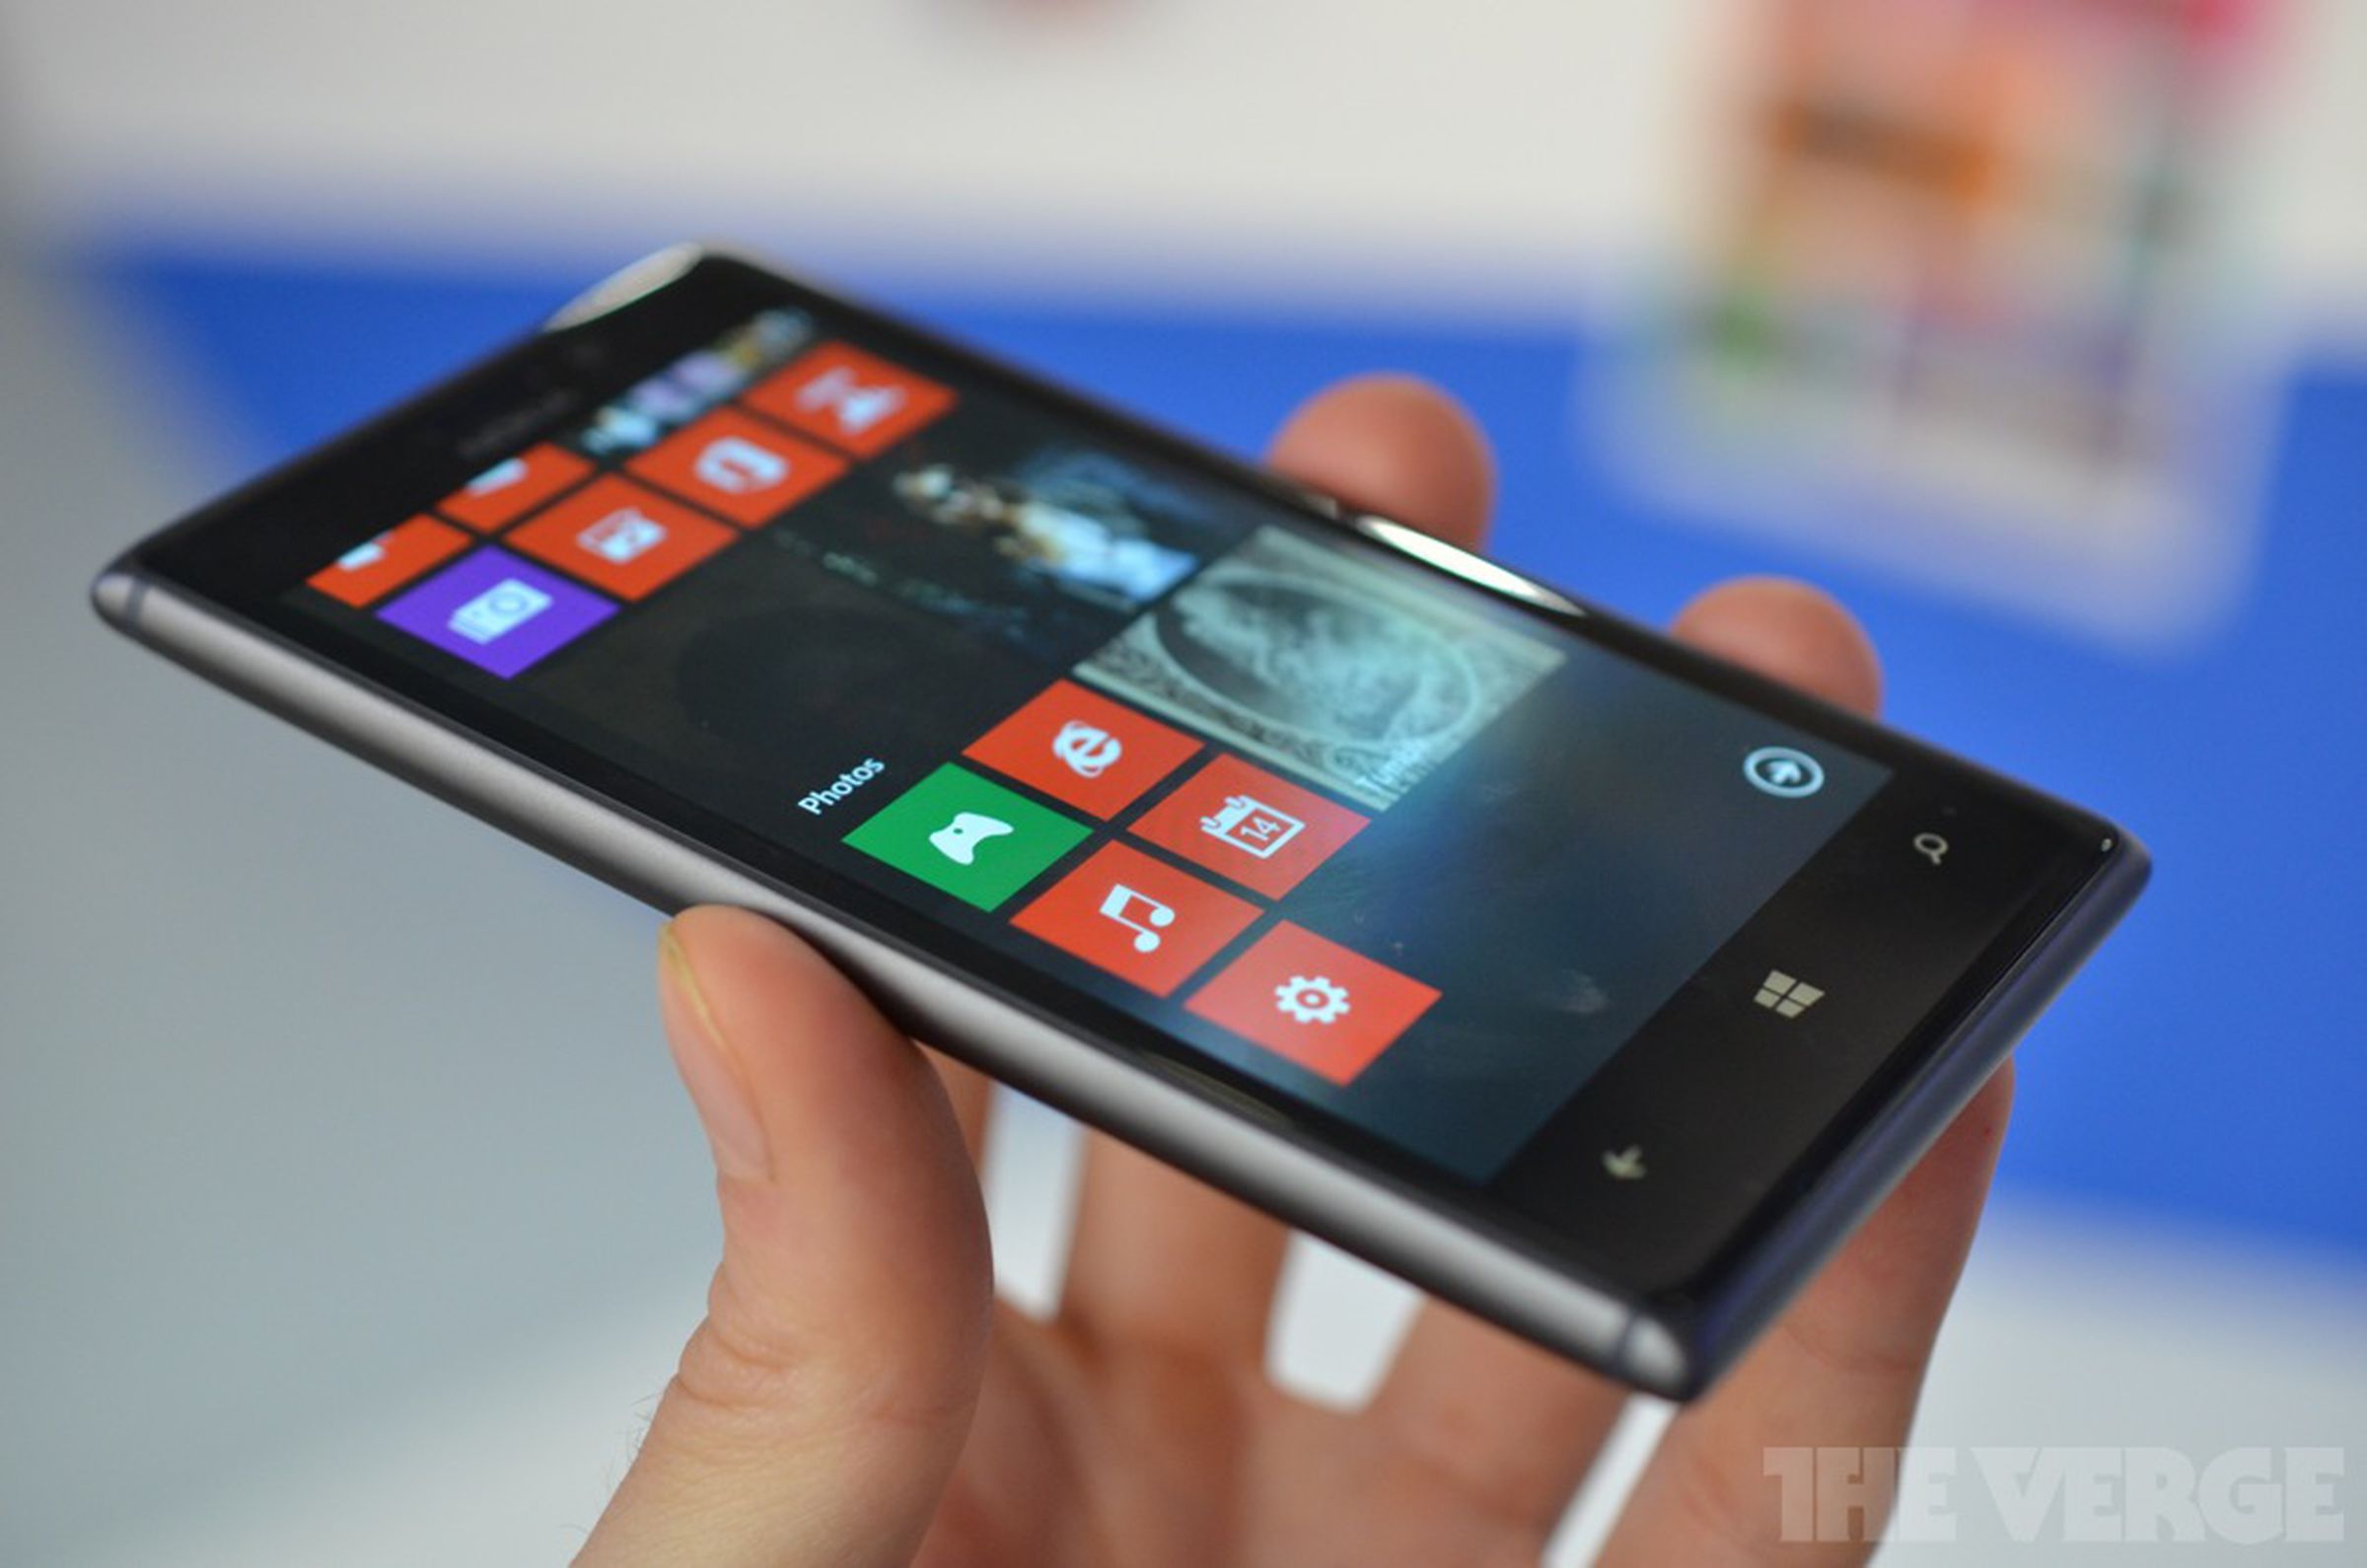 Nokia Lumia 925 hands-on gallery